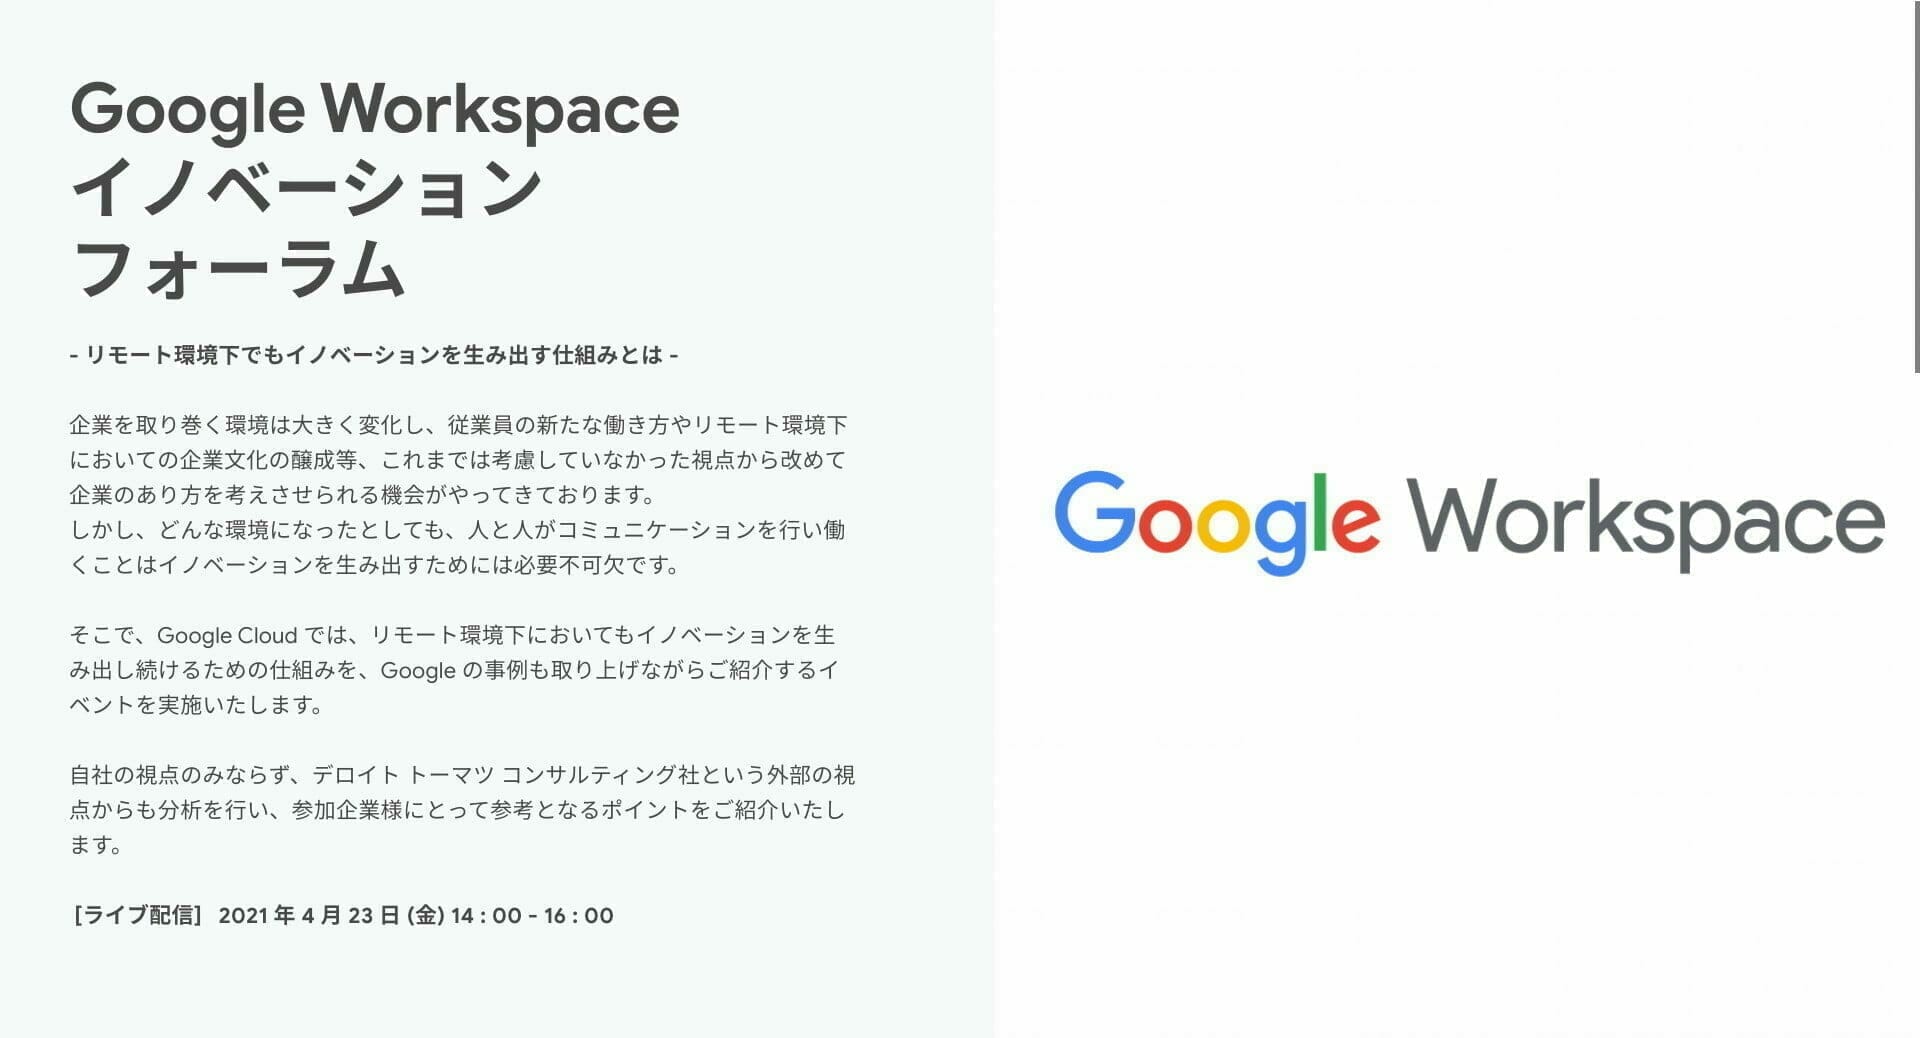 [Google Workspace] Googleイノベーションフォーラム